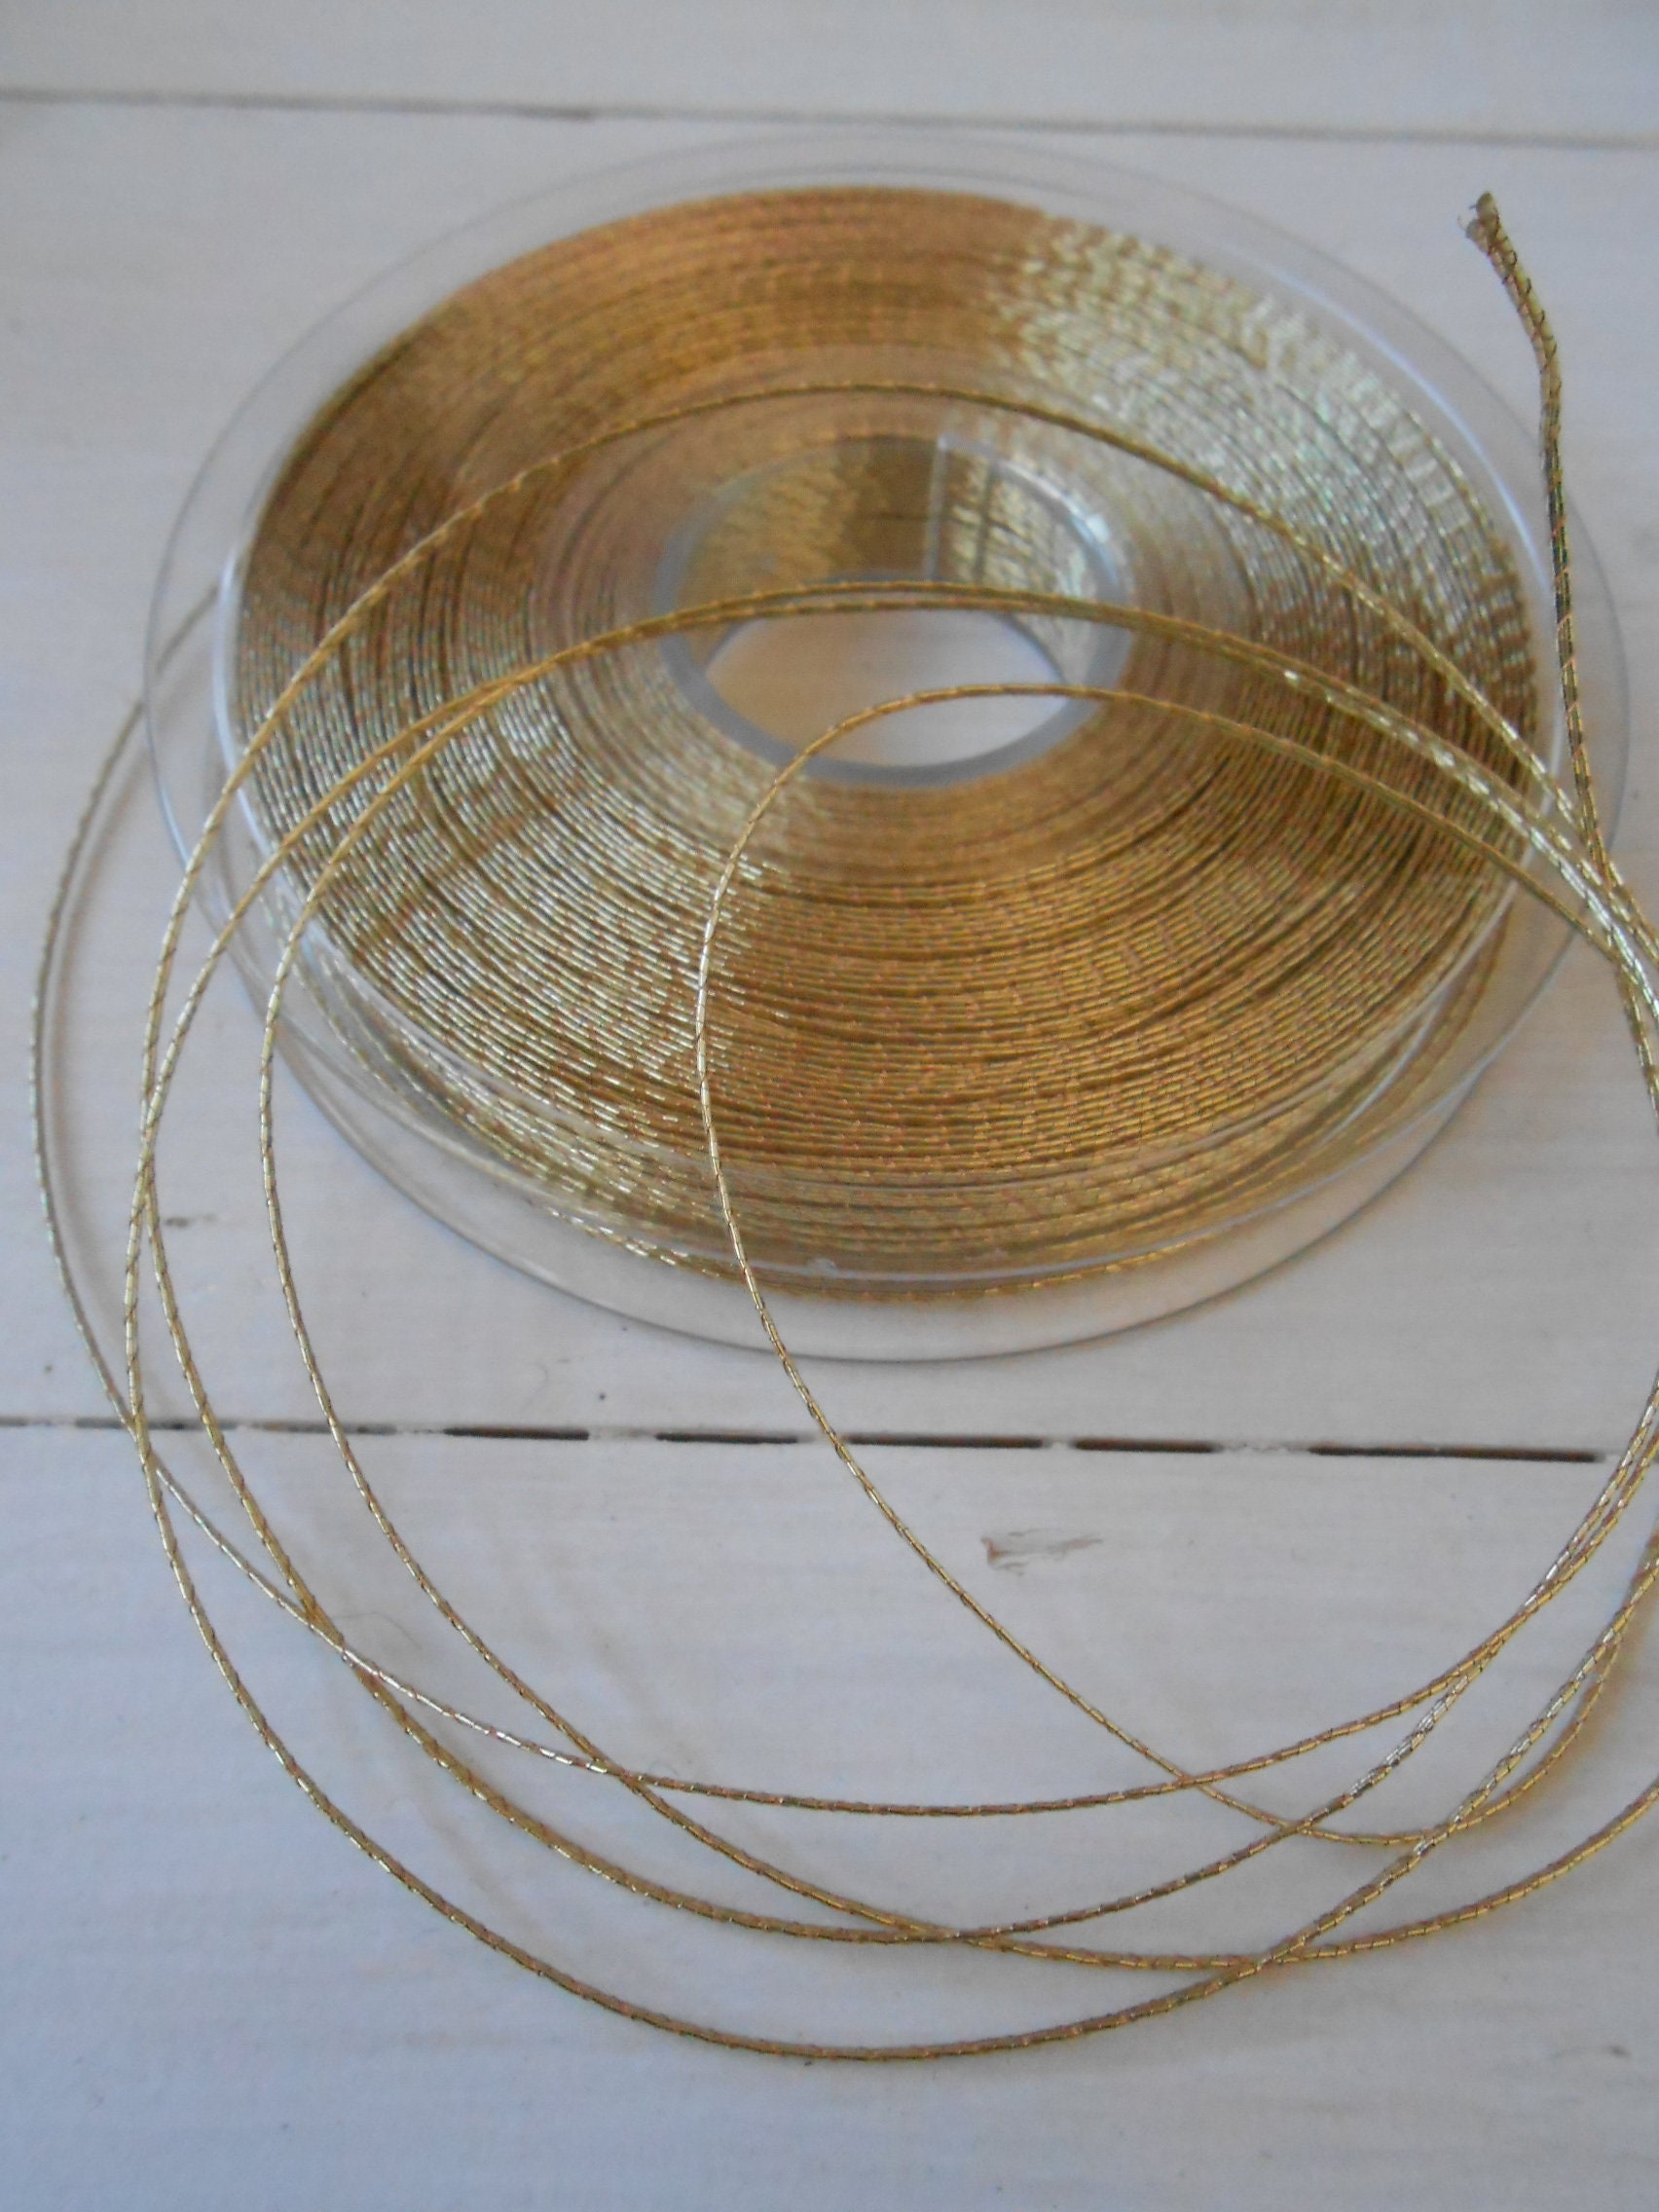 2PCS Metallic Crochet Thread,Metallic Thread Round Band Yarn,Lurex Yarn  with Metallic Shine,Crochet Thread Sparkle Metallic Yarn Shine Yarn for Car